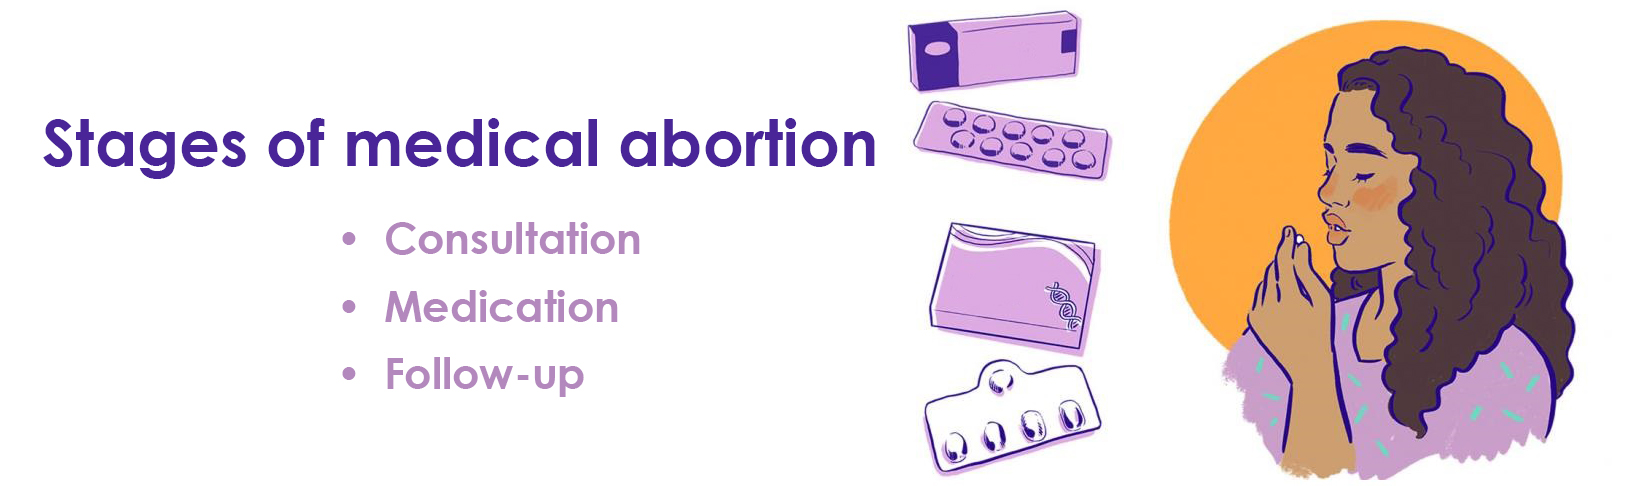 Stages of medical abortion in Lviv Ukraine